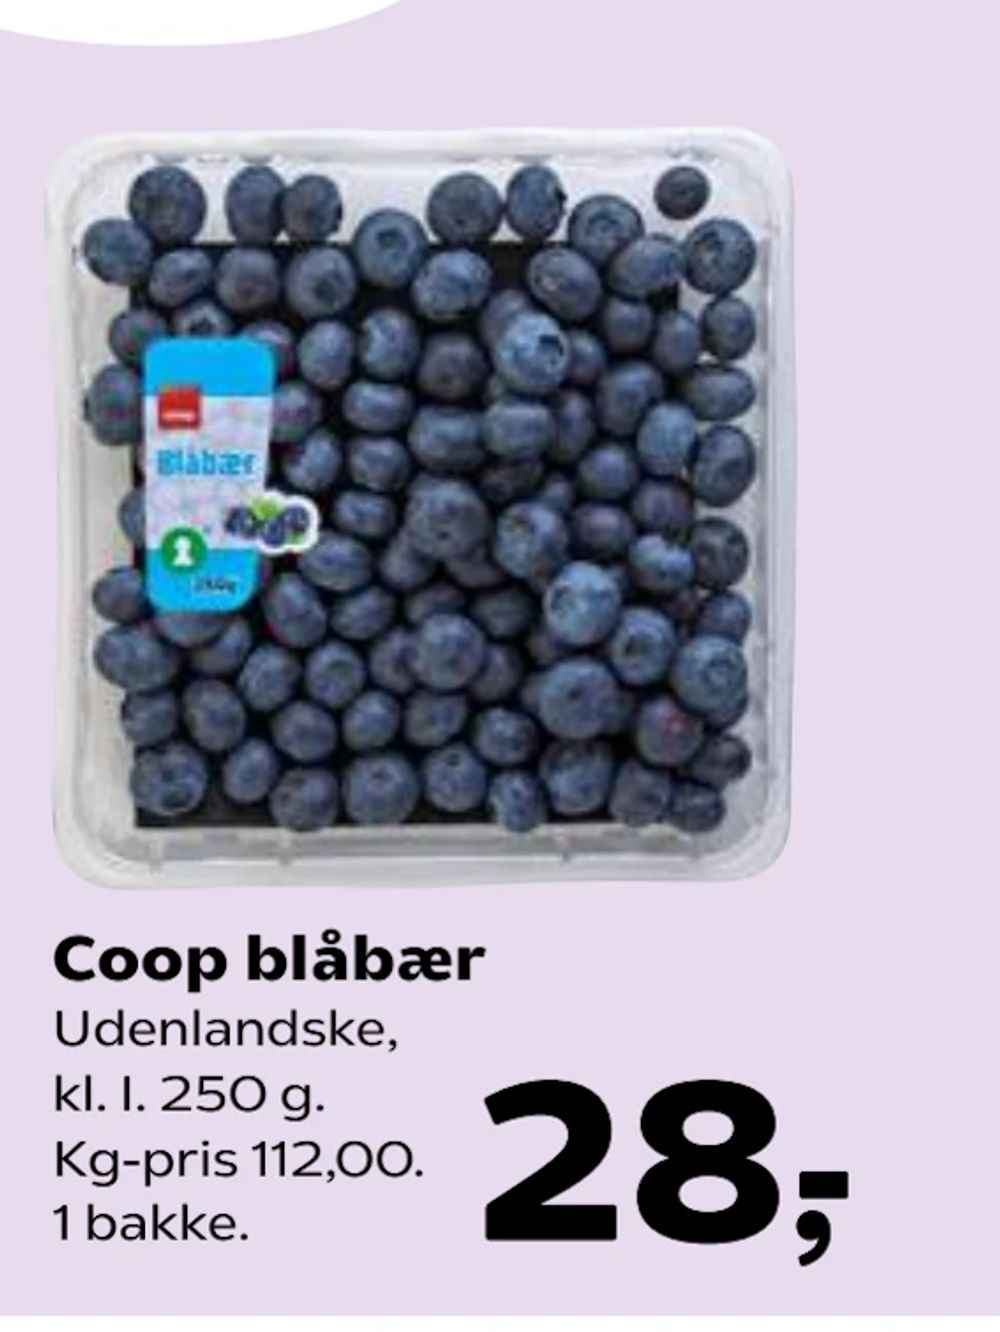 Tilbud på Coop blåbær fra Kvickly til 28 kr.